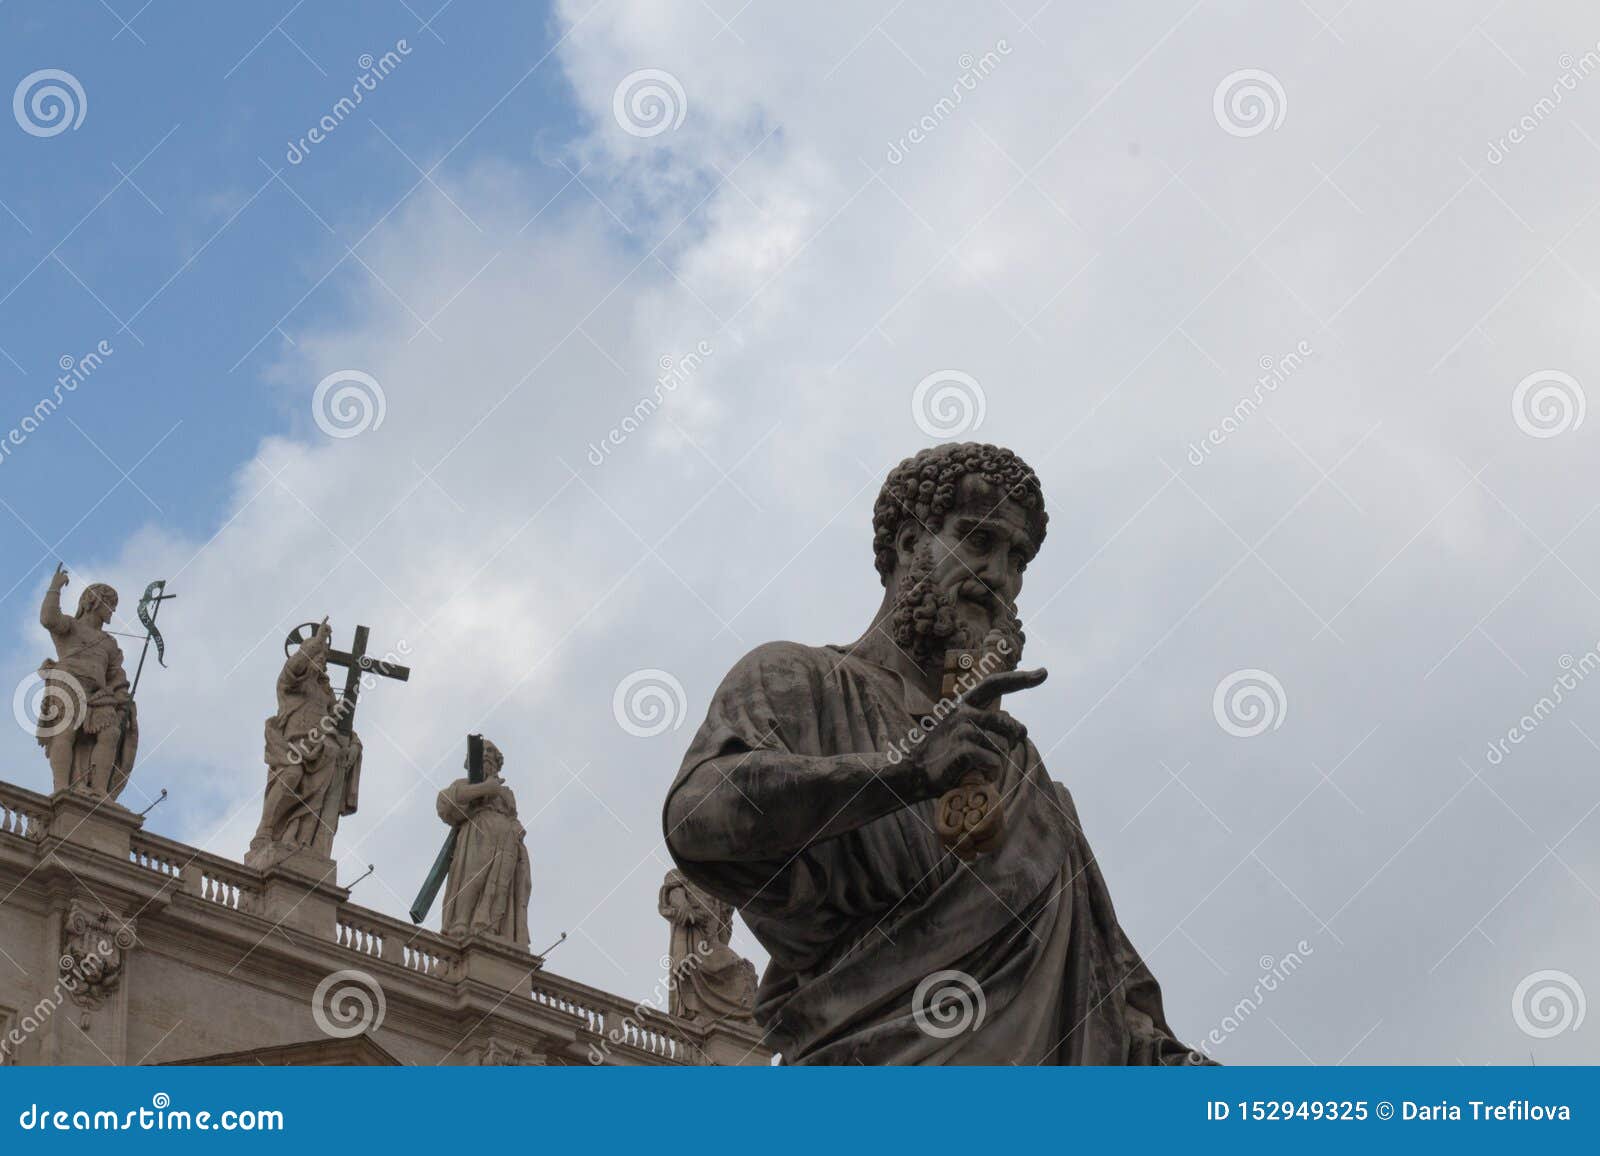 Апостол петра молния. Молния попала в статую апостола Петра в Риме. Статуя апостола Петра молния.